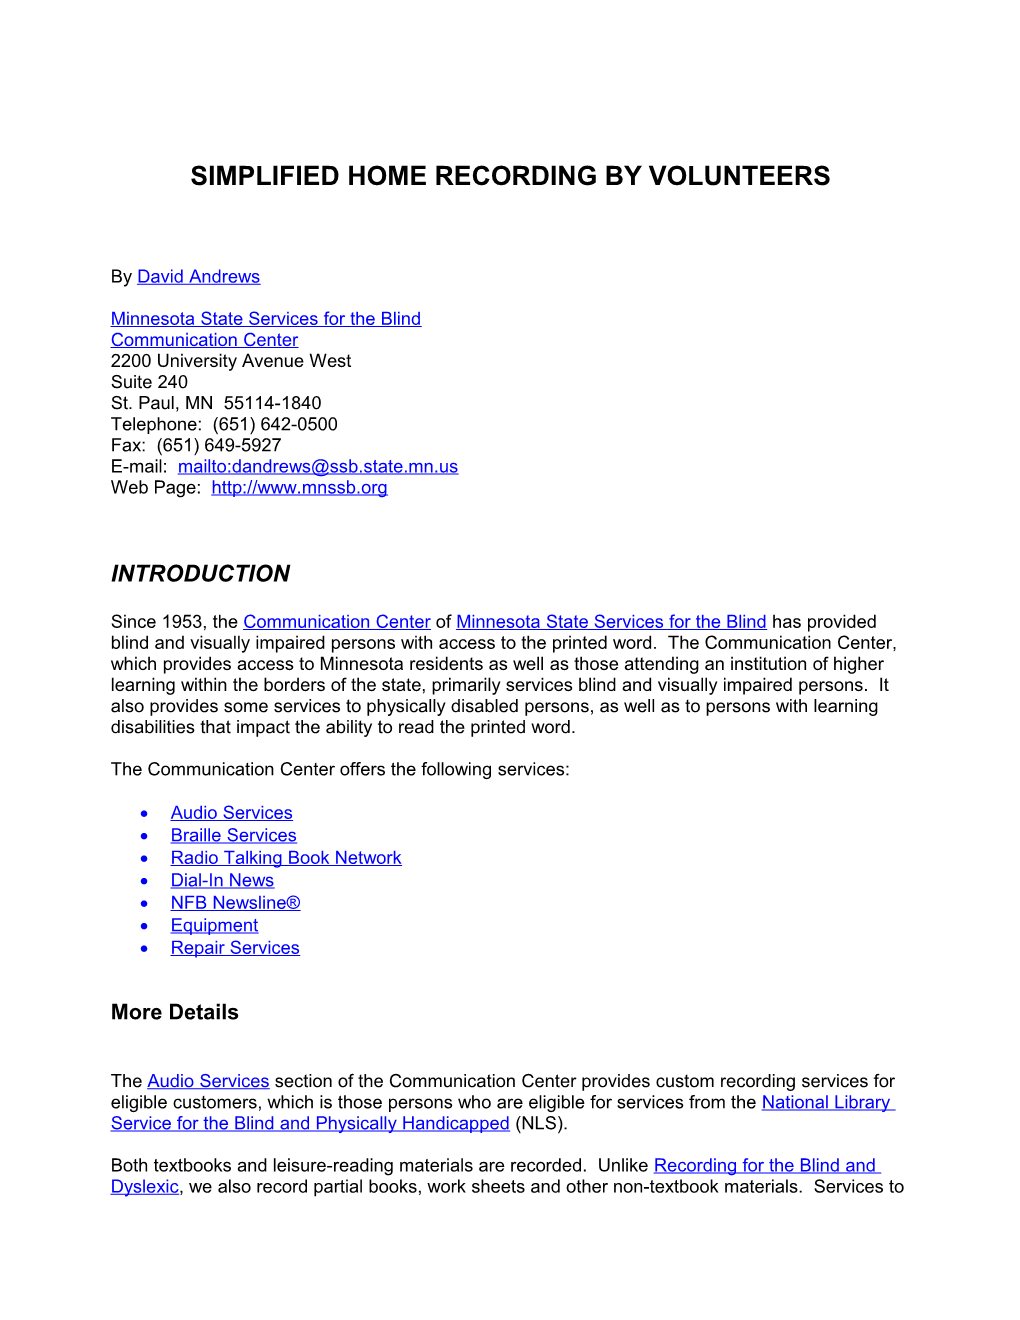 Simplified Home Recording by Volunteers